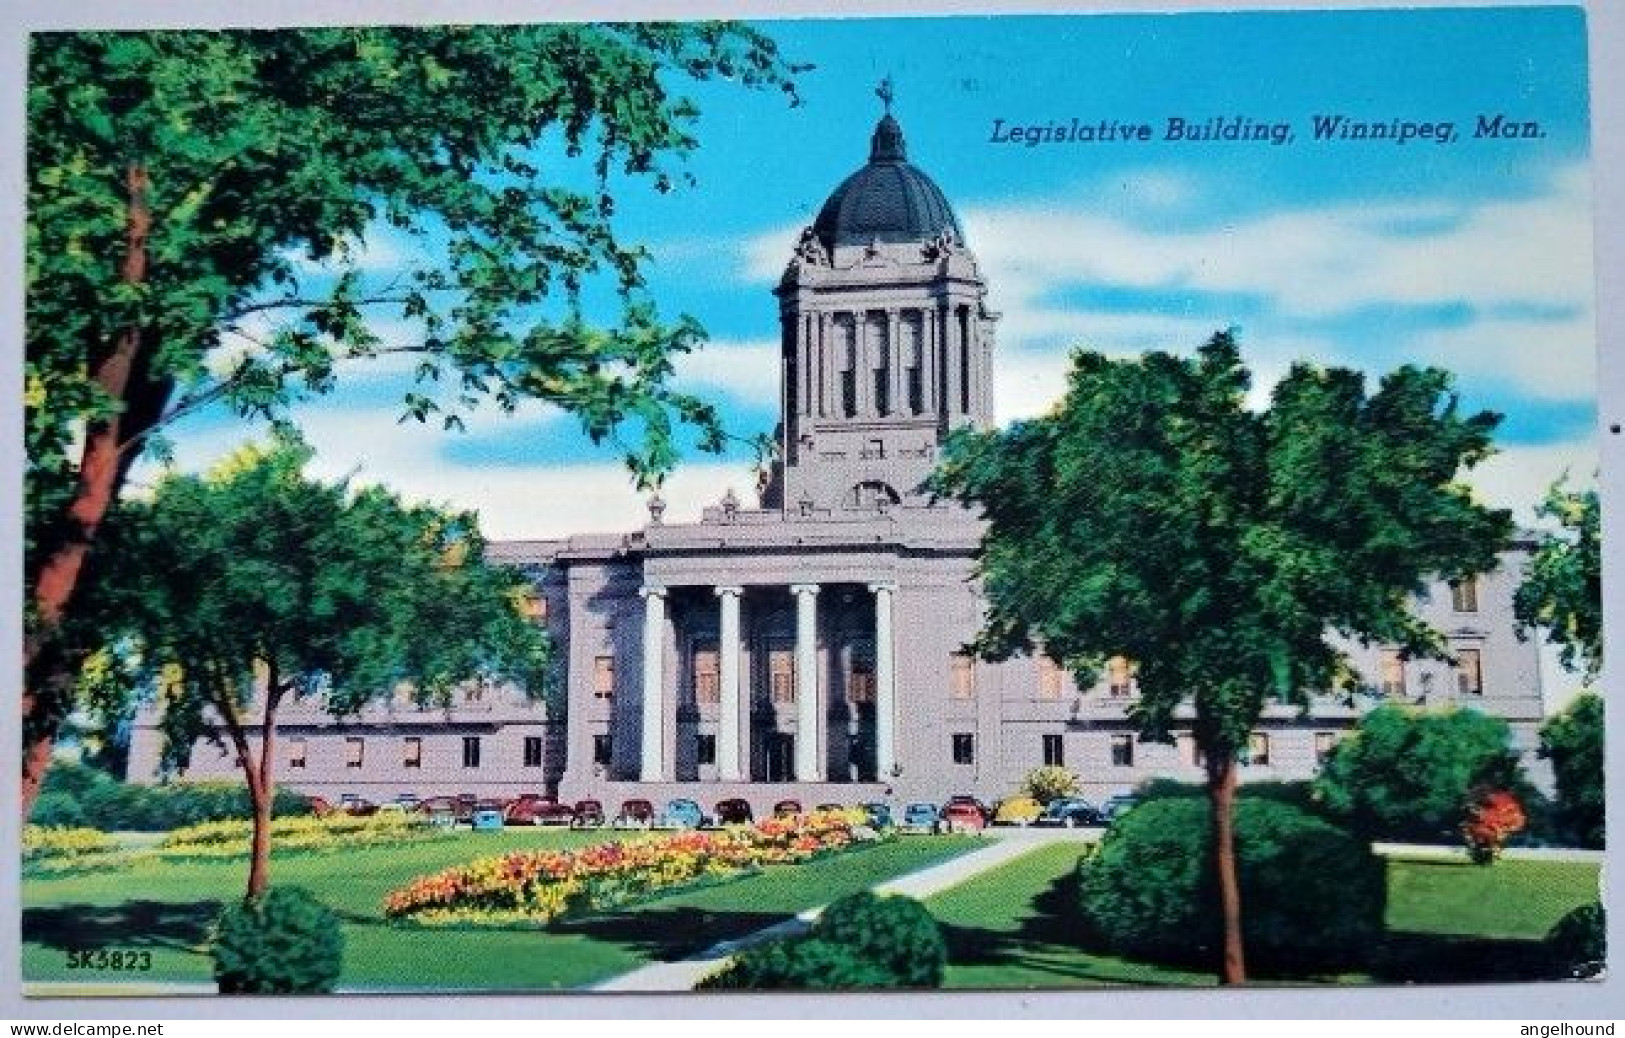 Manitoba's Legislative Building - Winnipeg